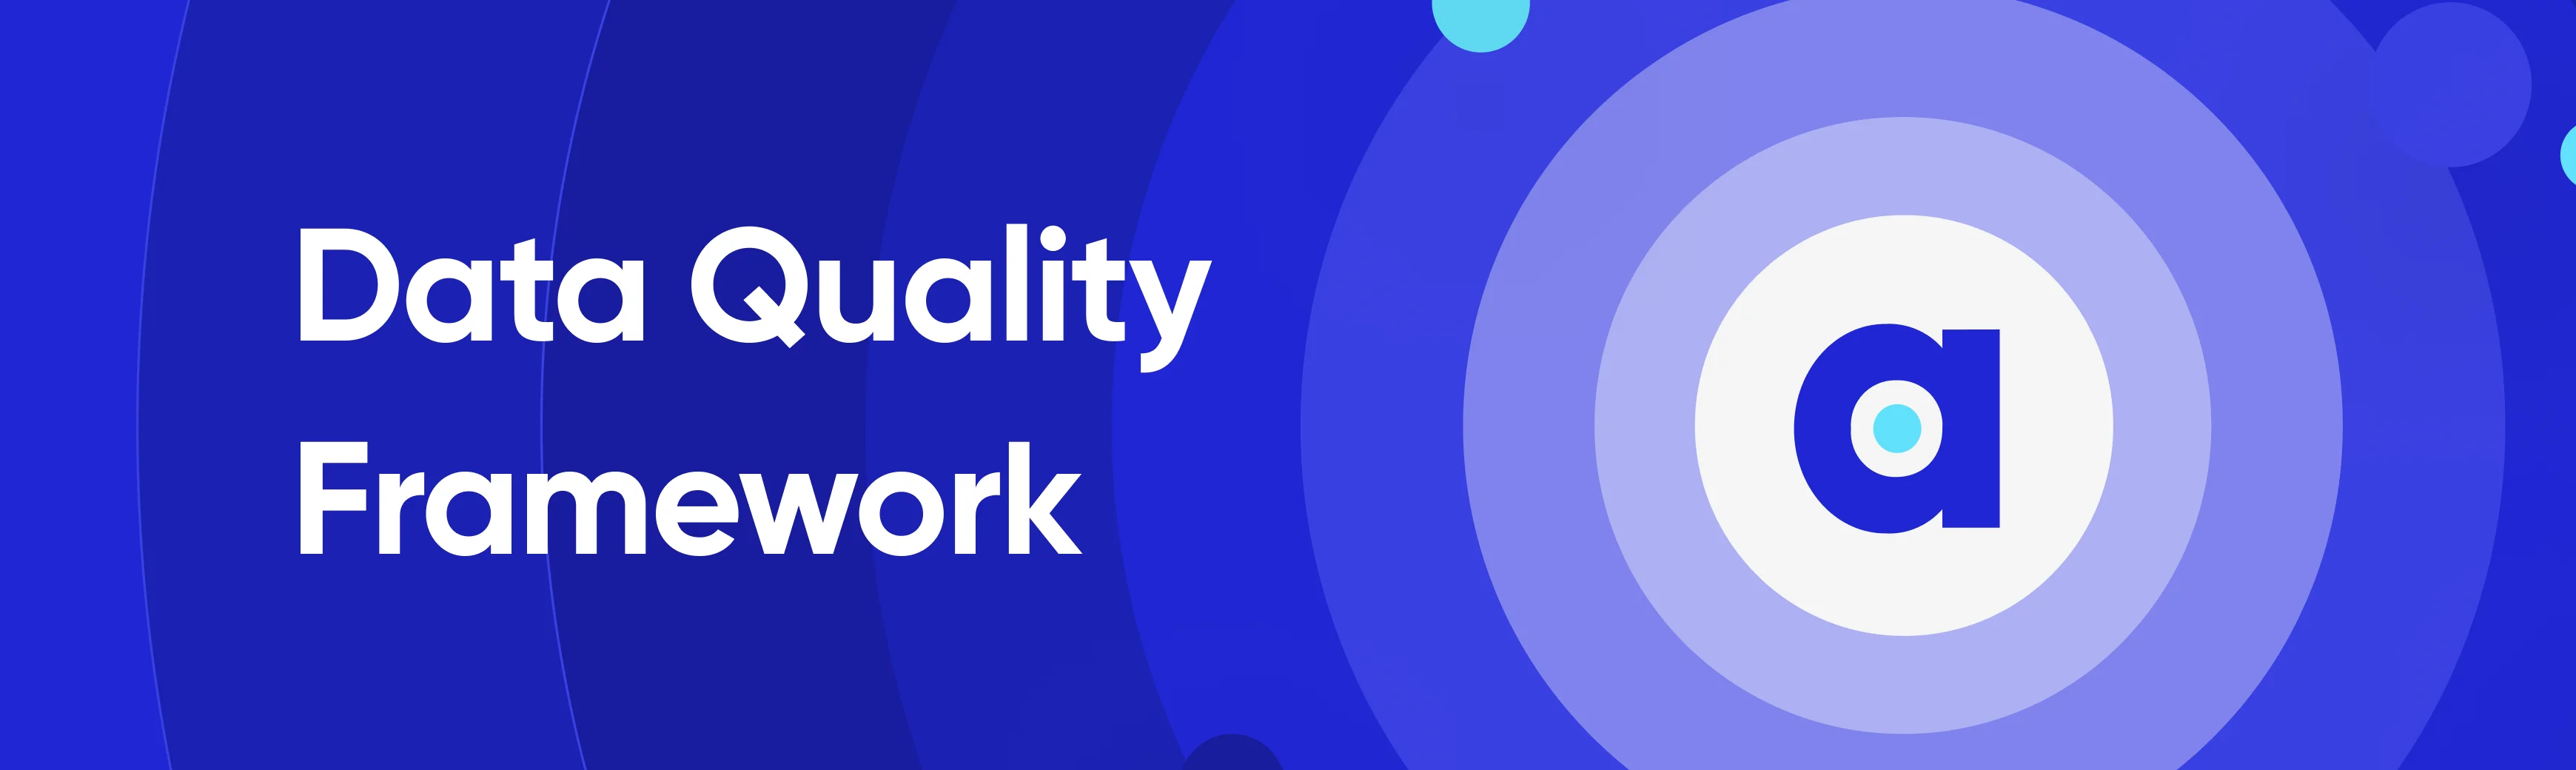 Data quality framework